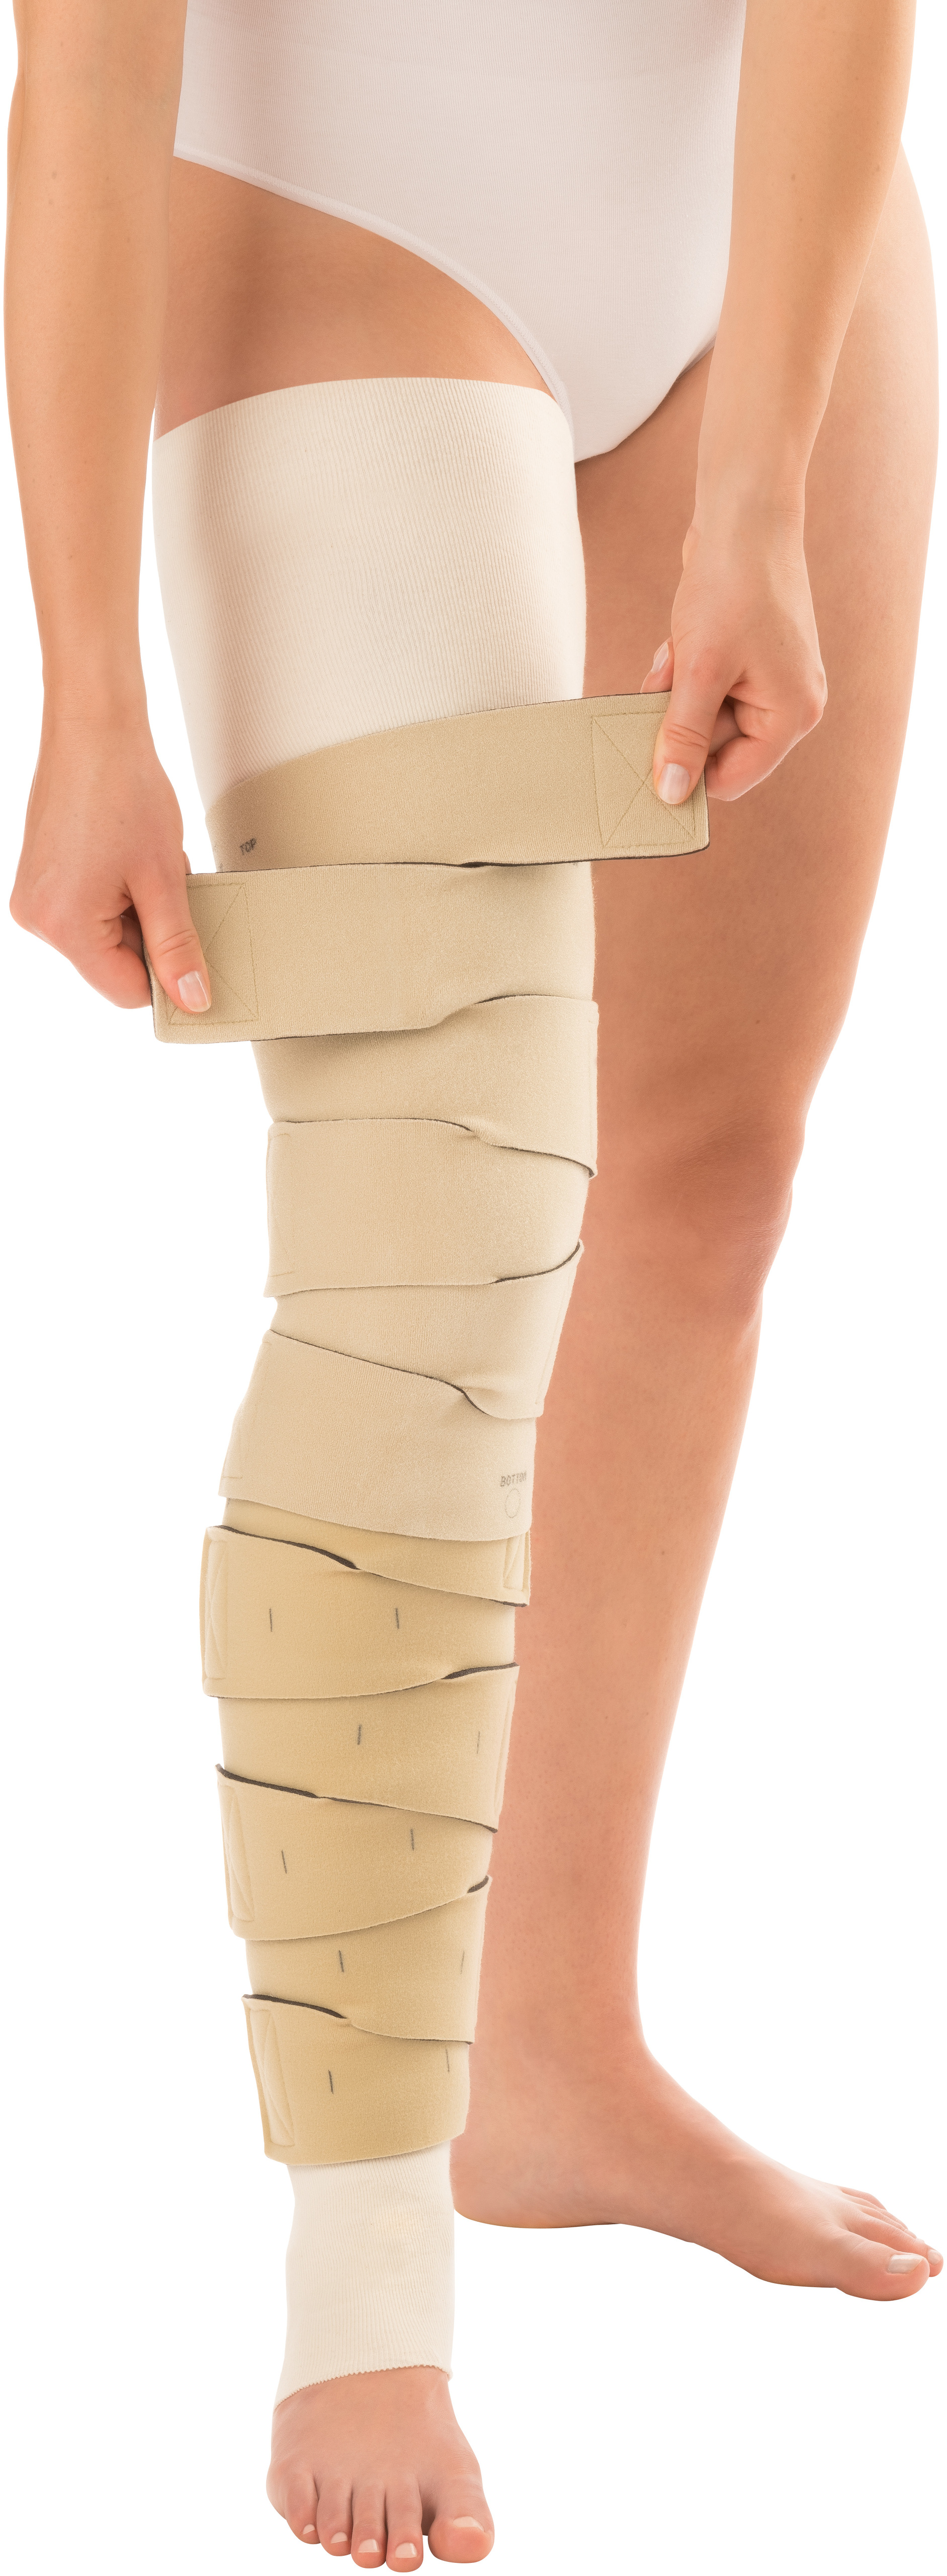 CircAid Reduction Kit Knee - Compression Health